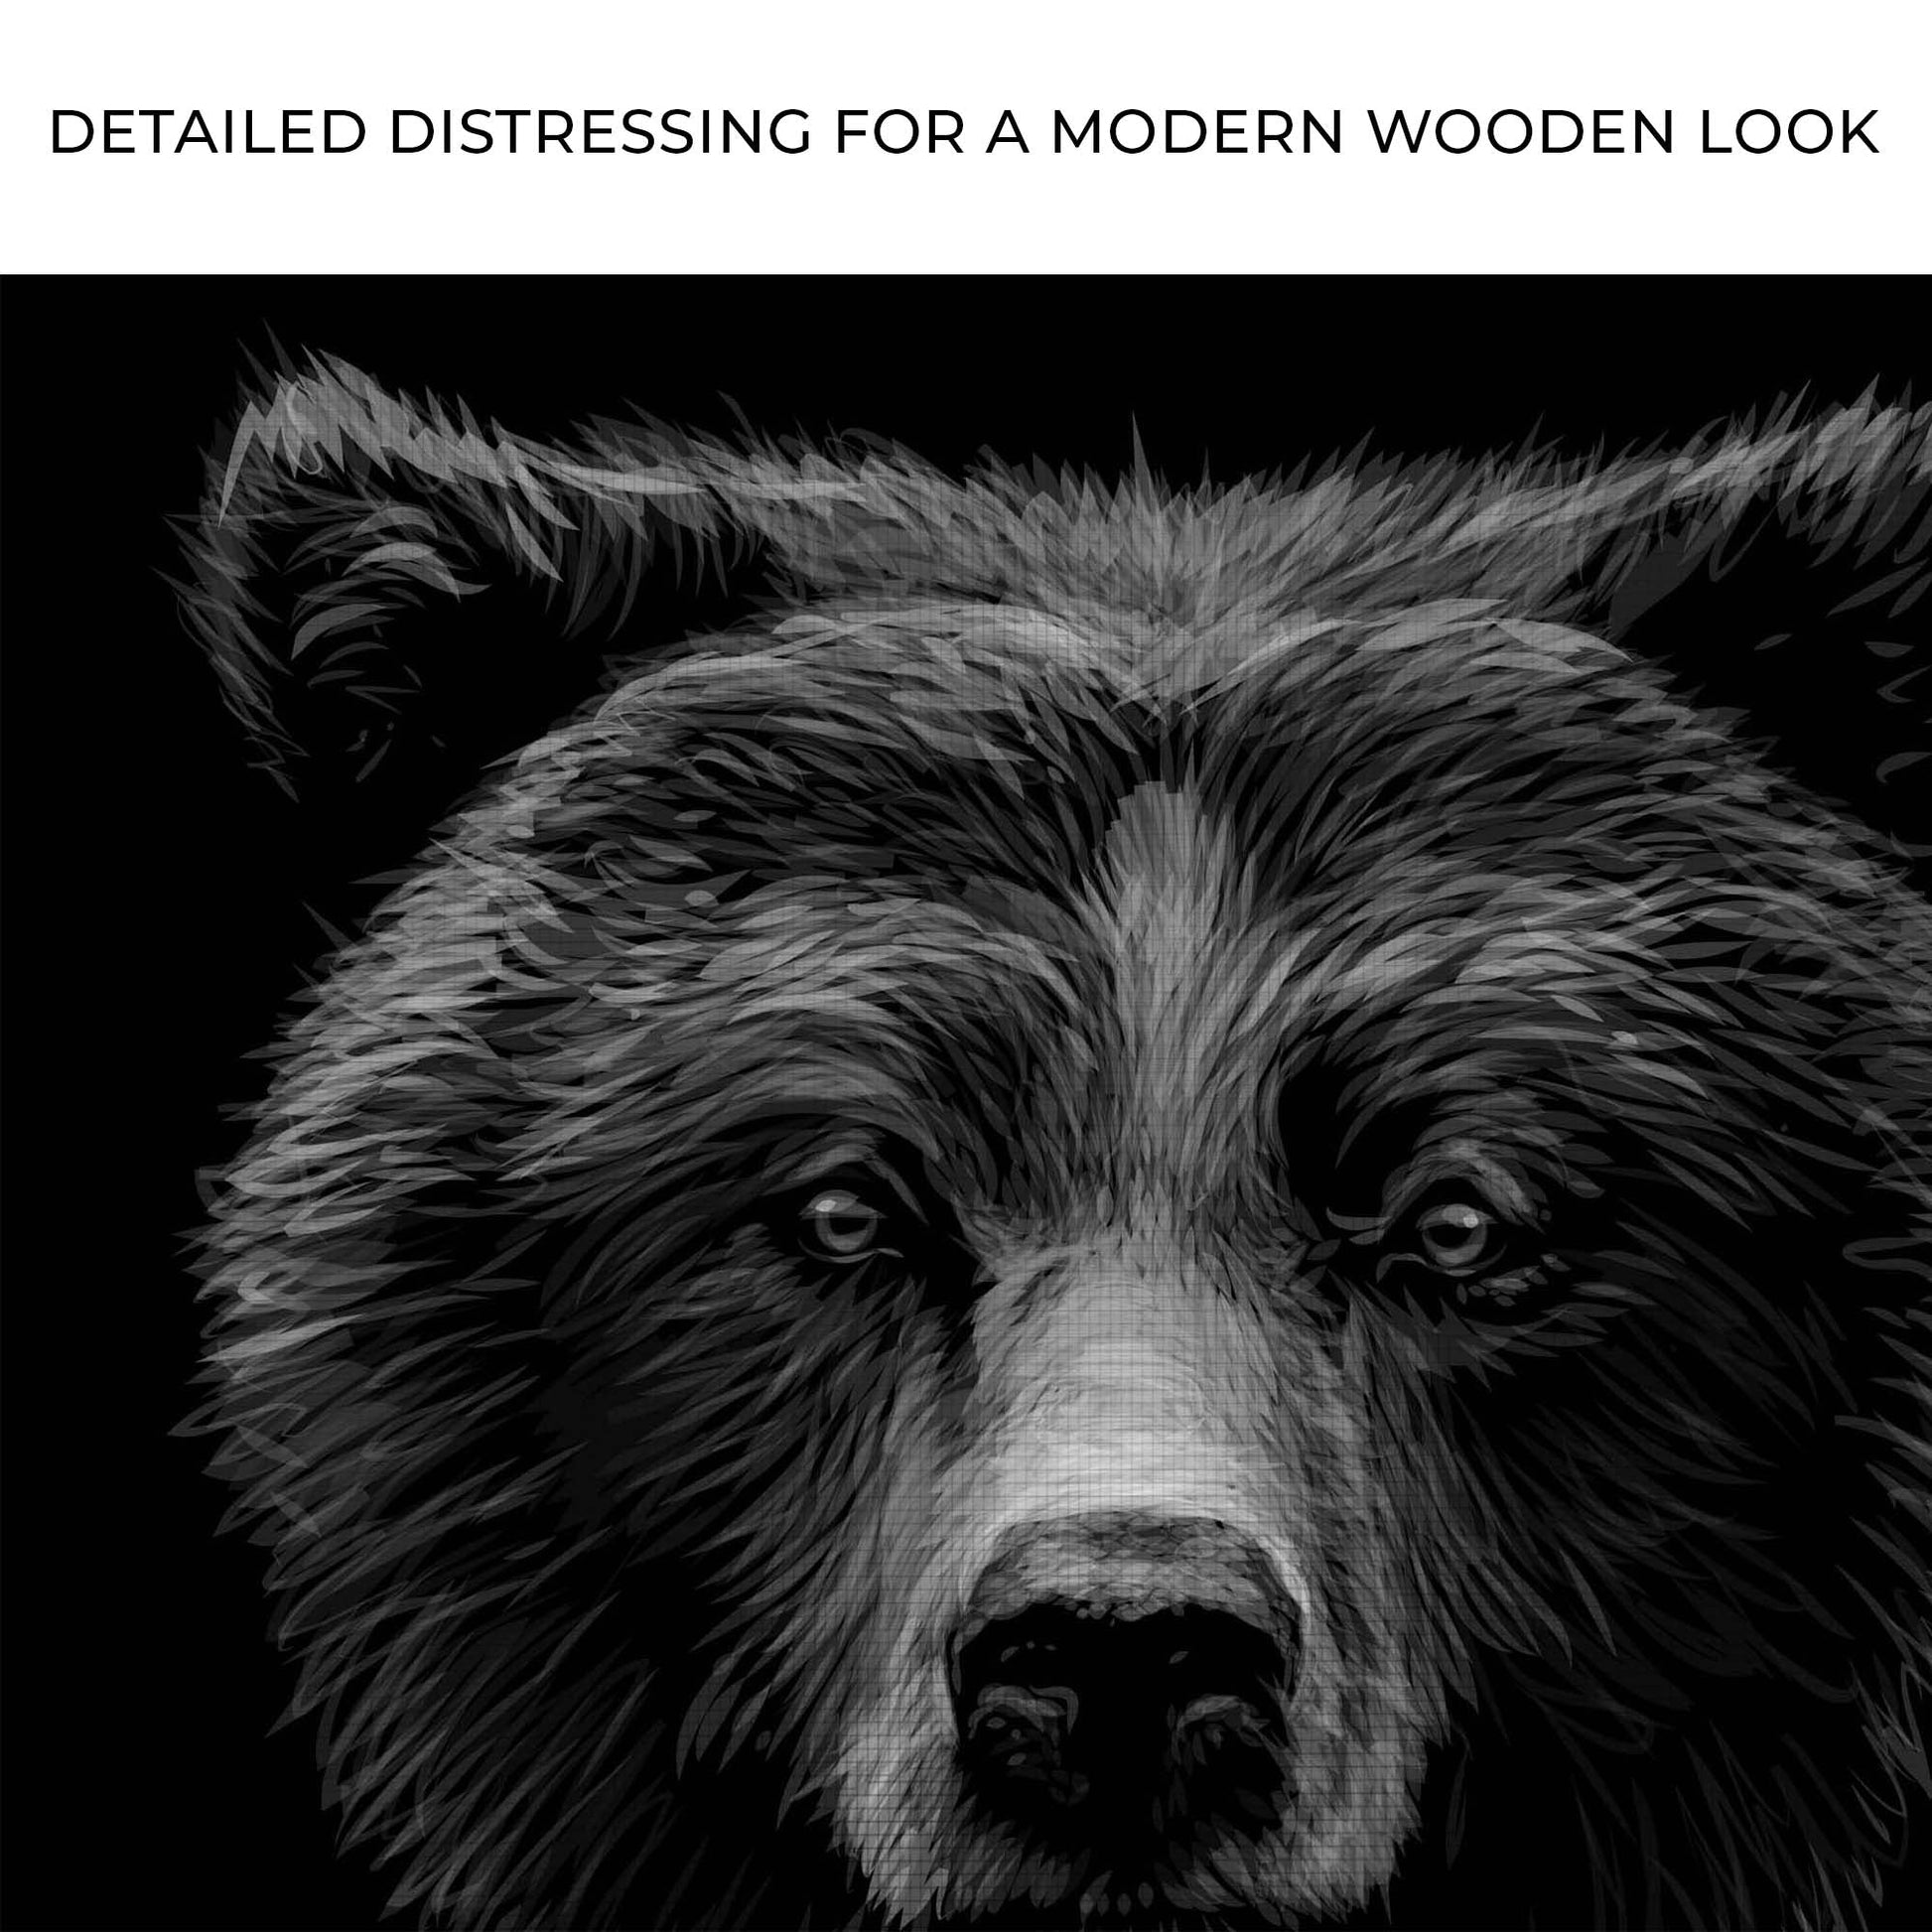 Monochromatic Woodland Bear Canvas Wall Decor with Wildlife